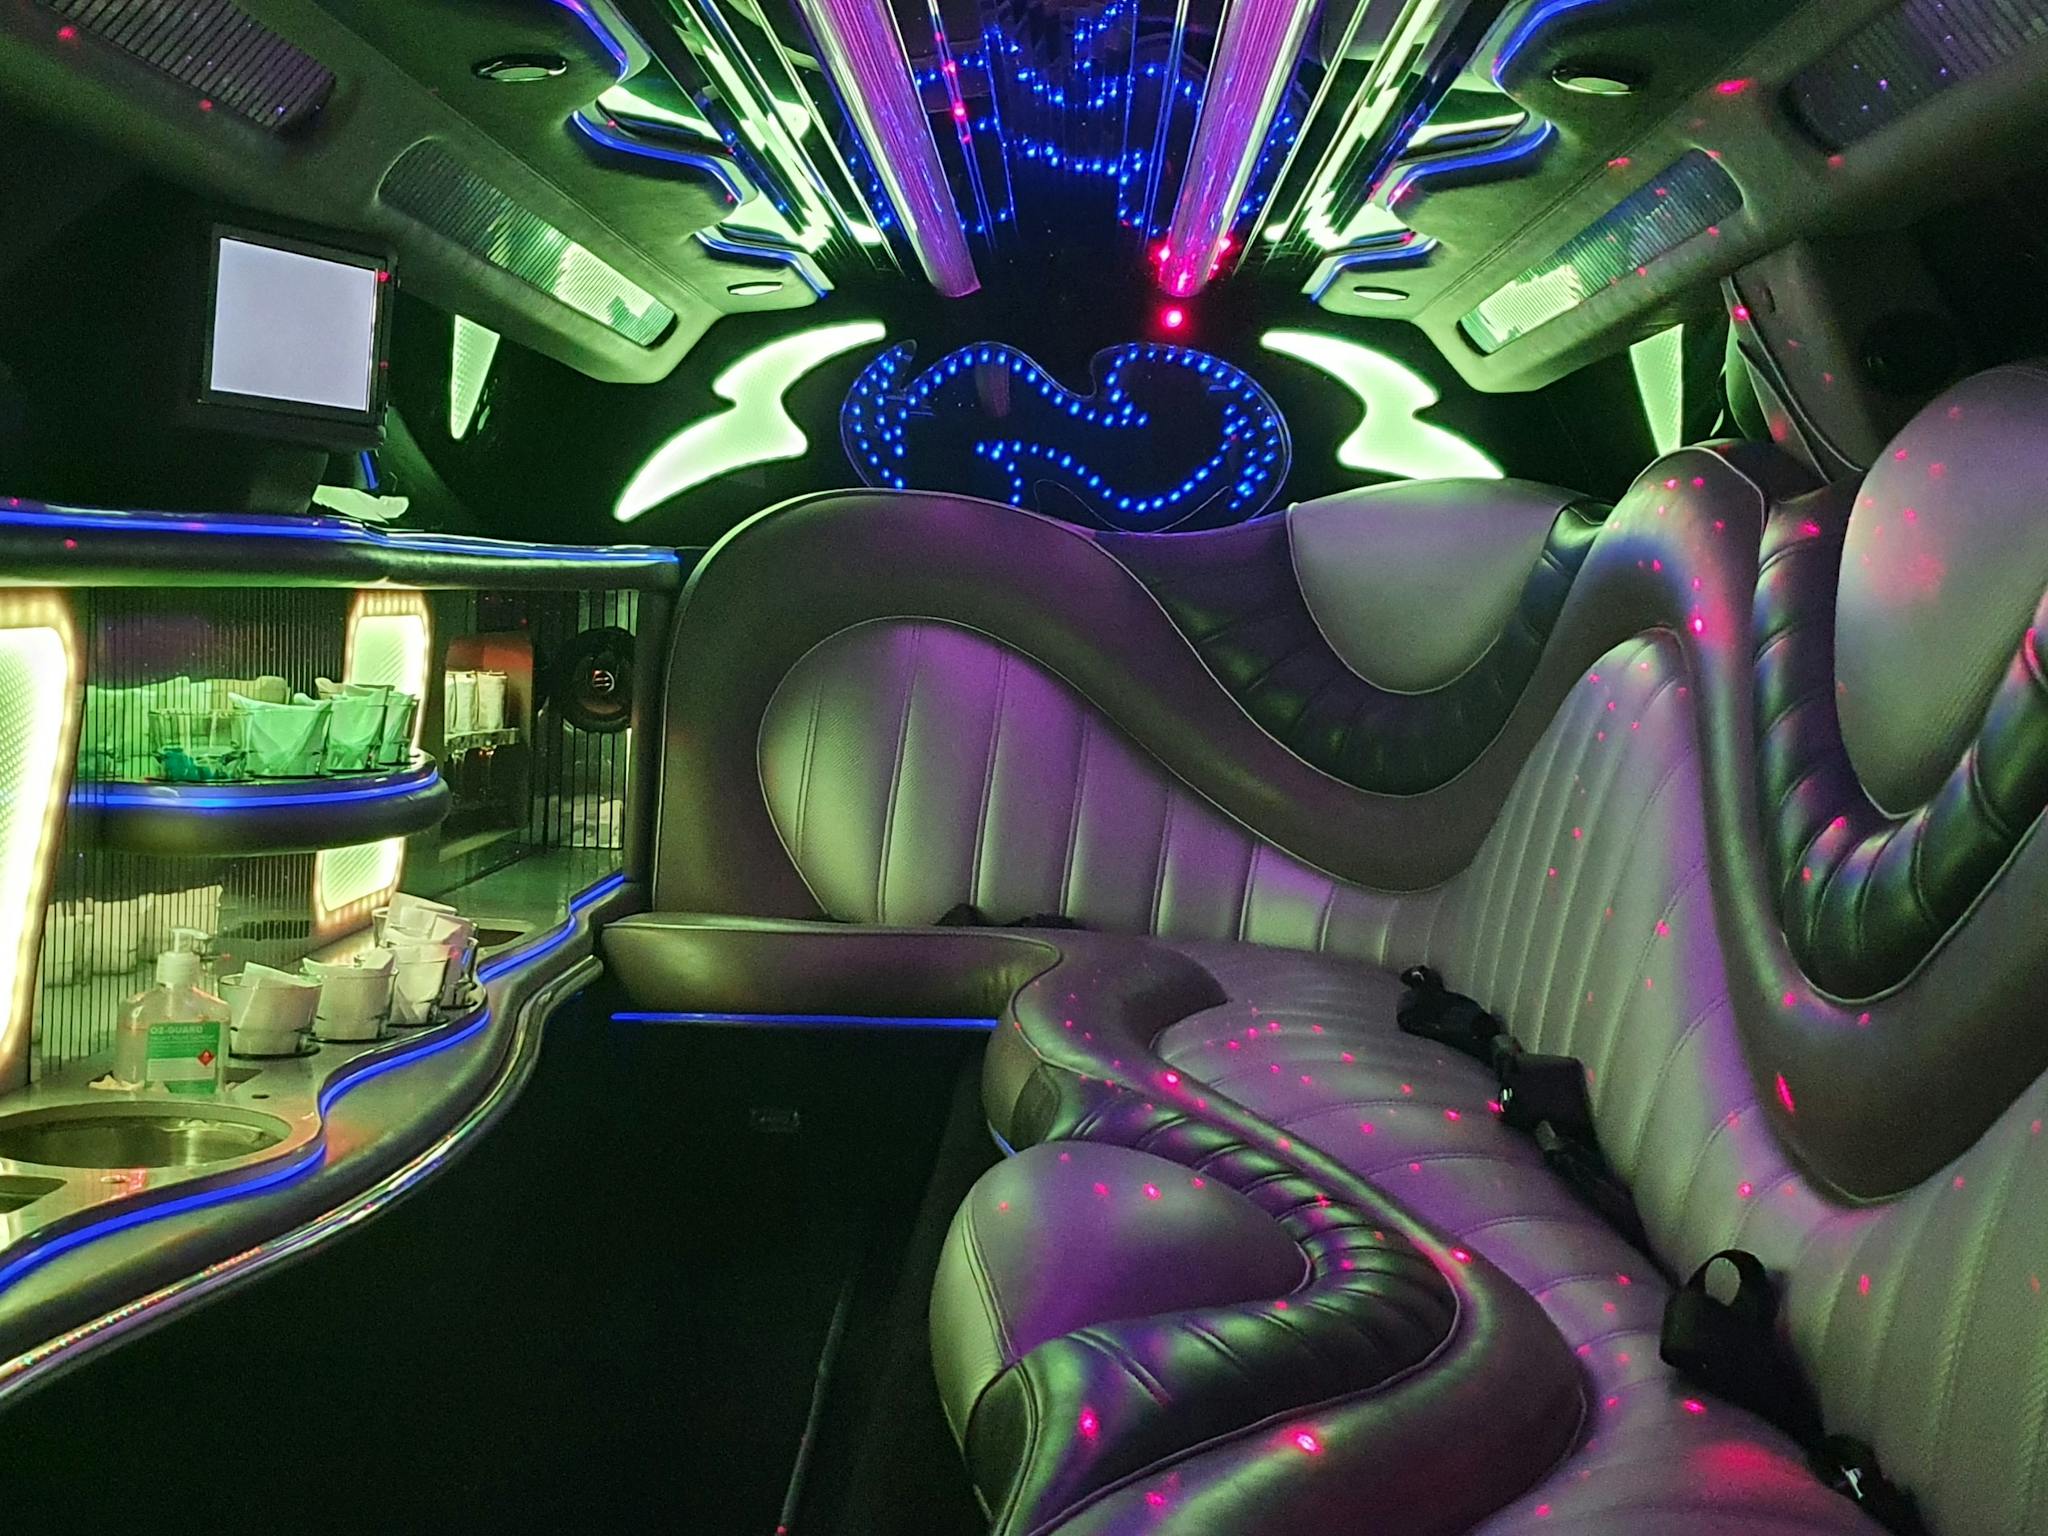 Limousine transport, 300c, Chrysler, Interior, luxury, transport, neon lights, laser, bar, LEDs, AC